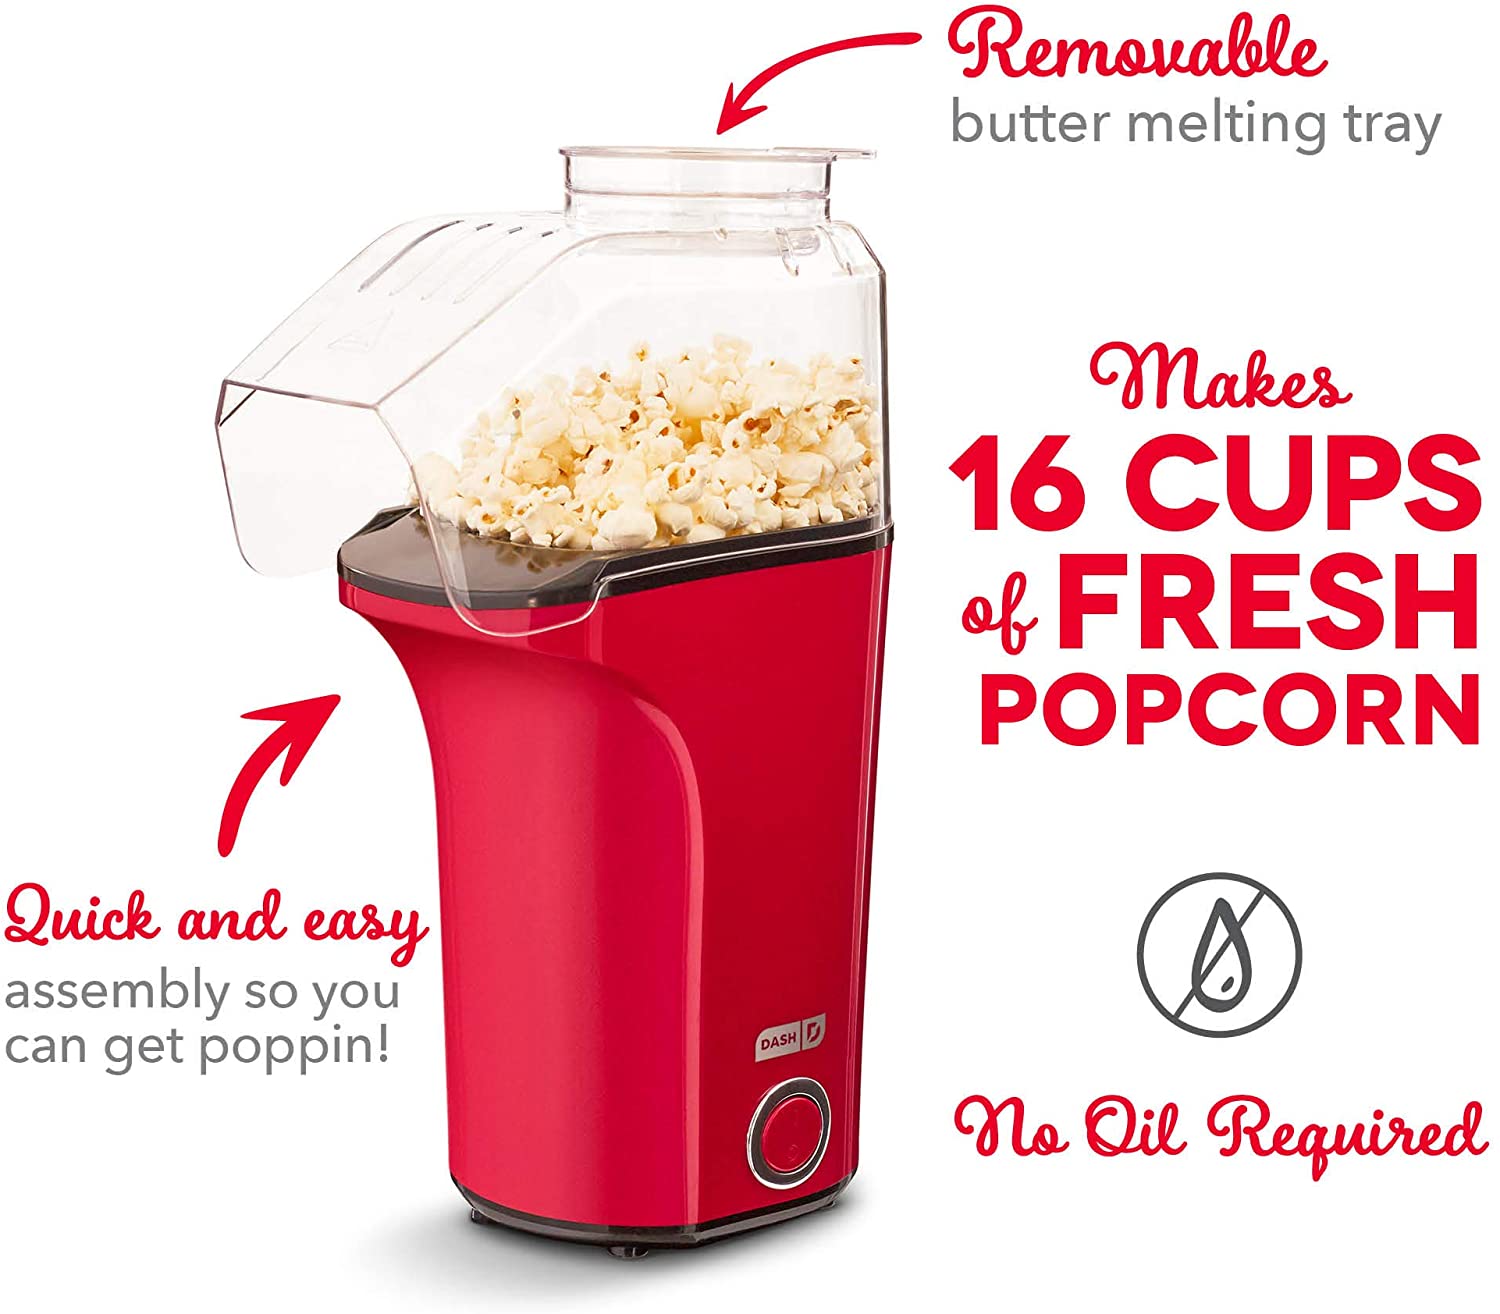 Dash Fresh Pop Popcorn Maker - Red